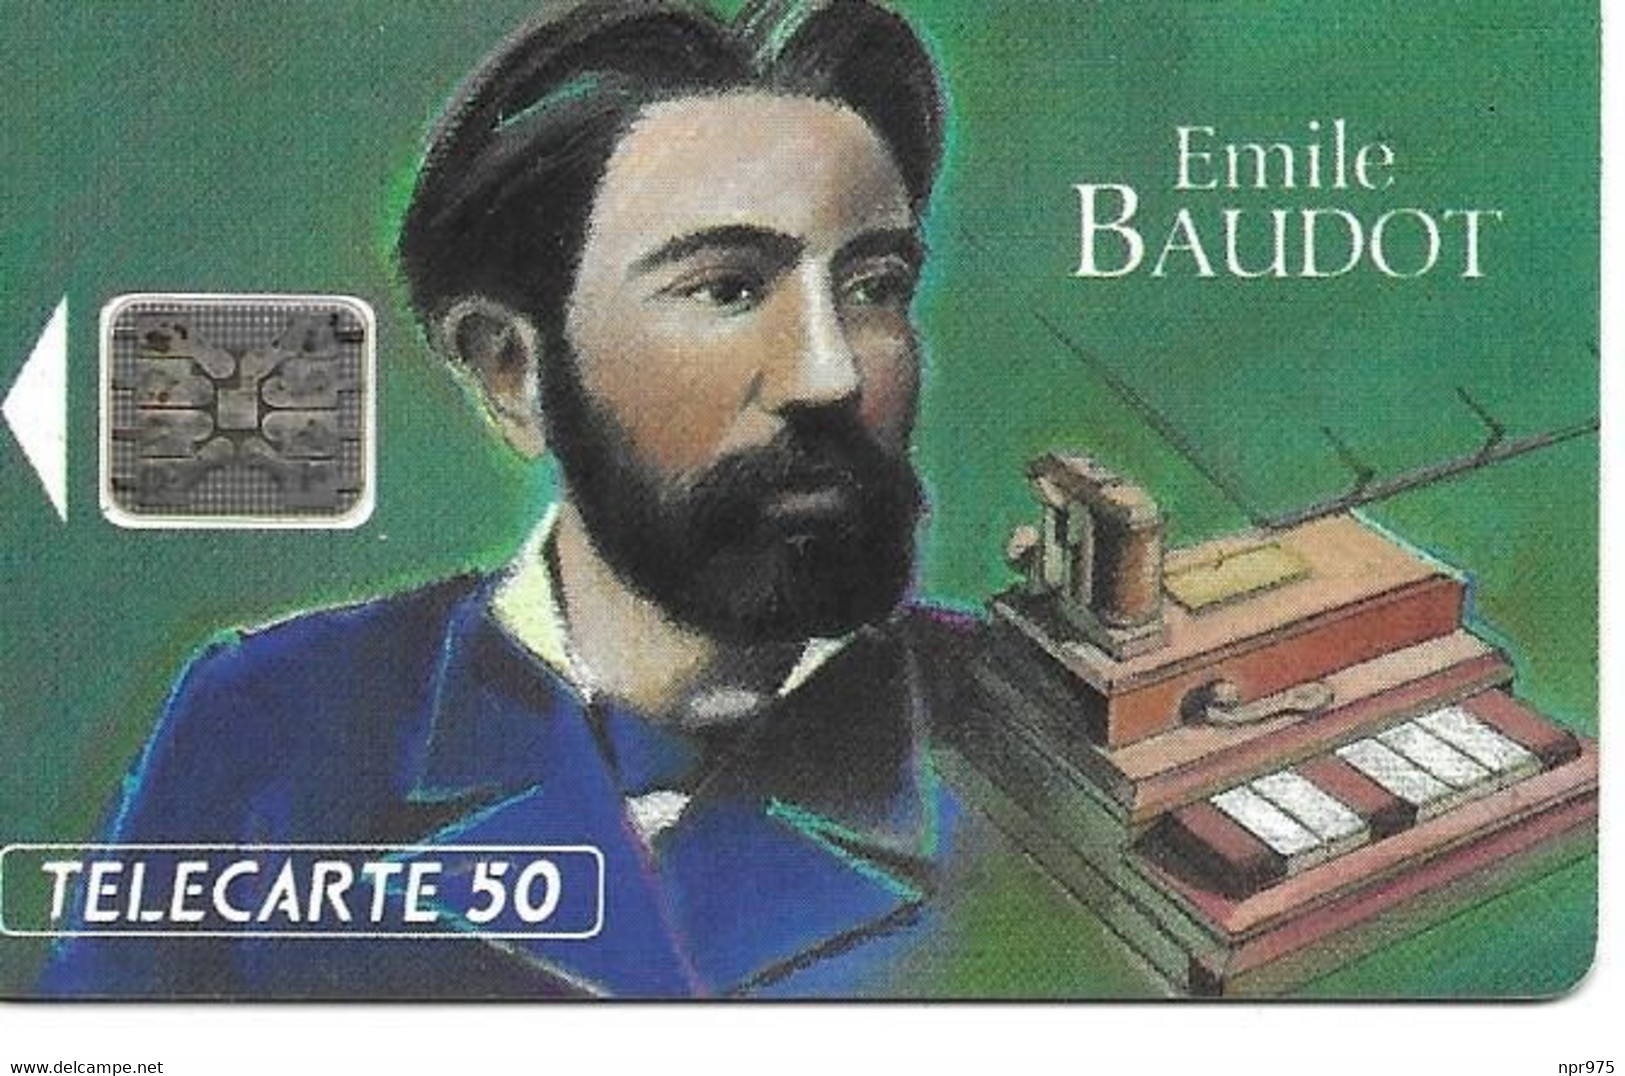 Telecarte Emile Baudot Telegraphe - Téléphones